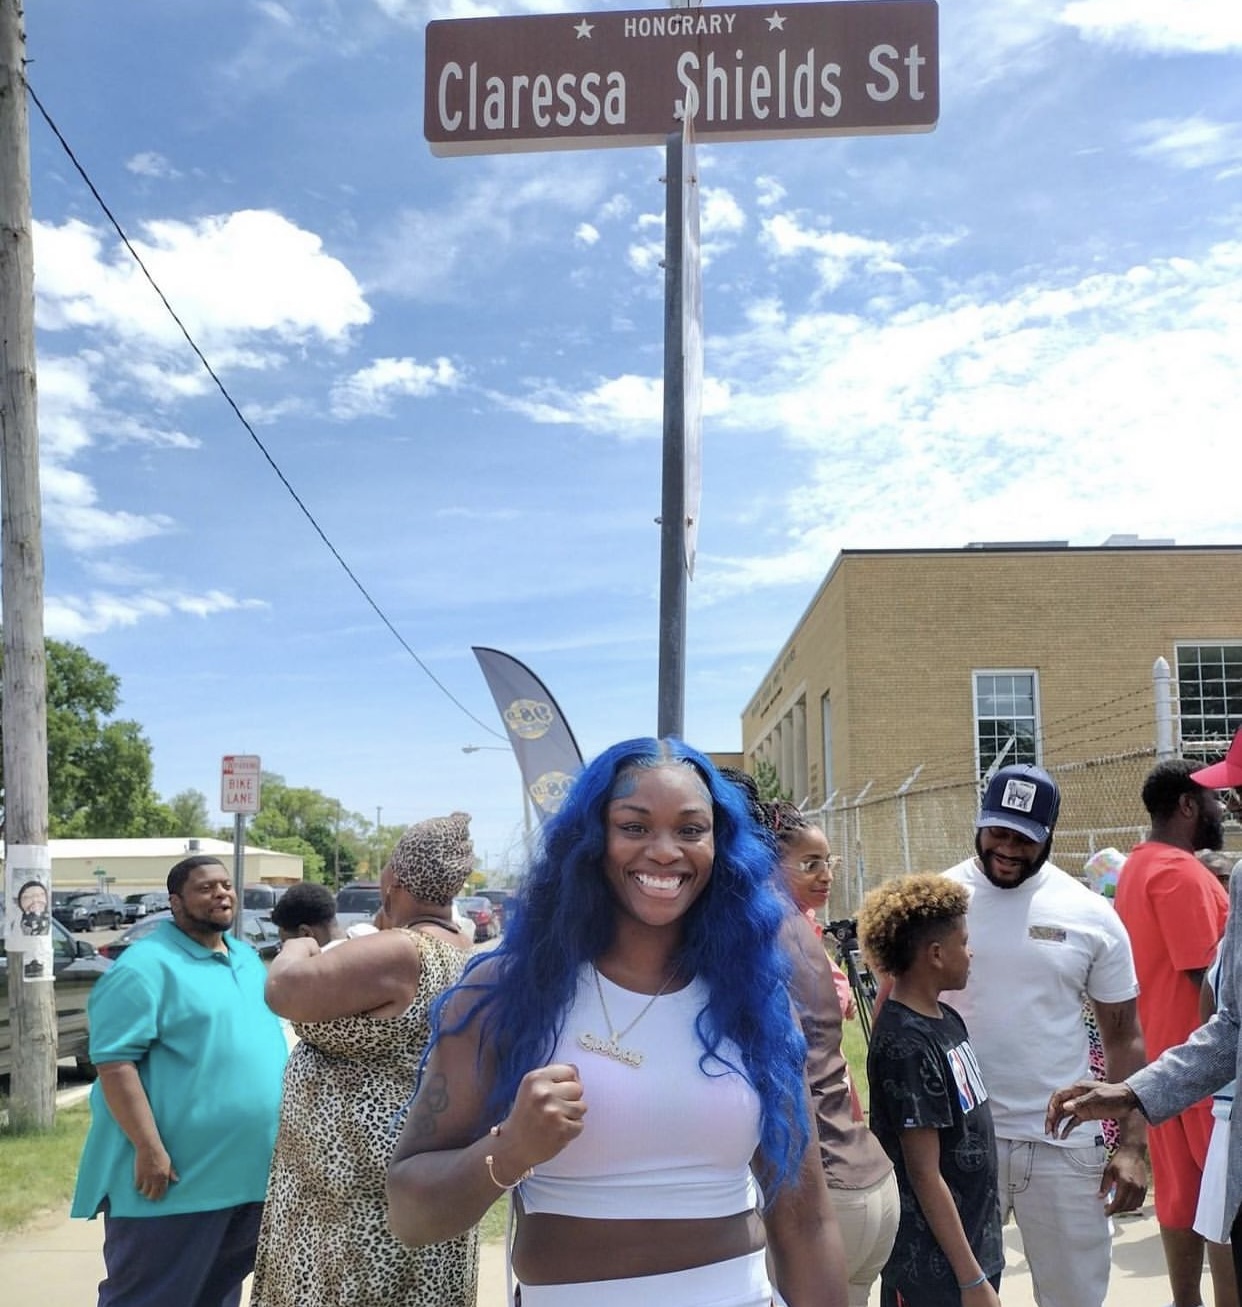 Claressa Shields now has her own street 